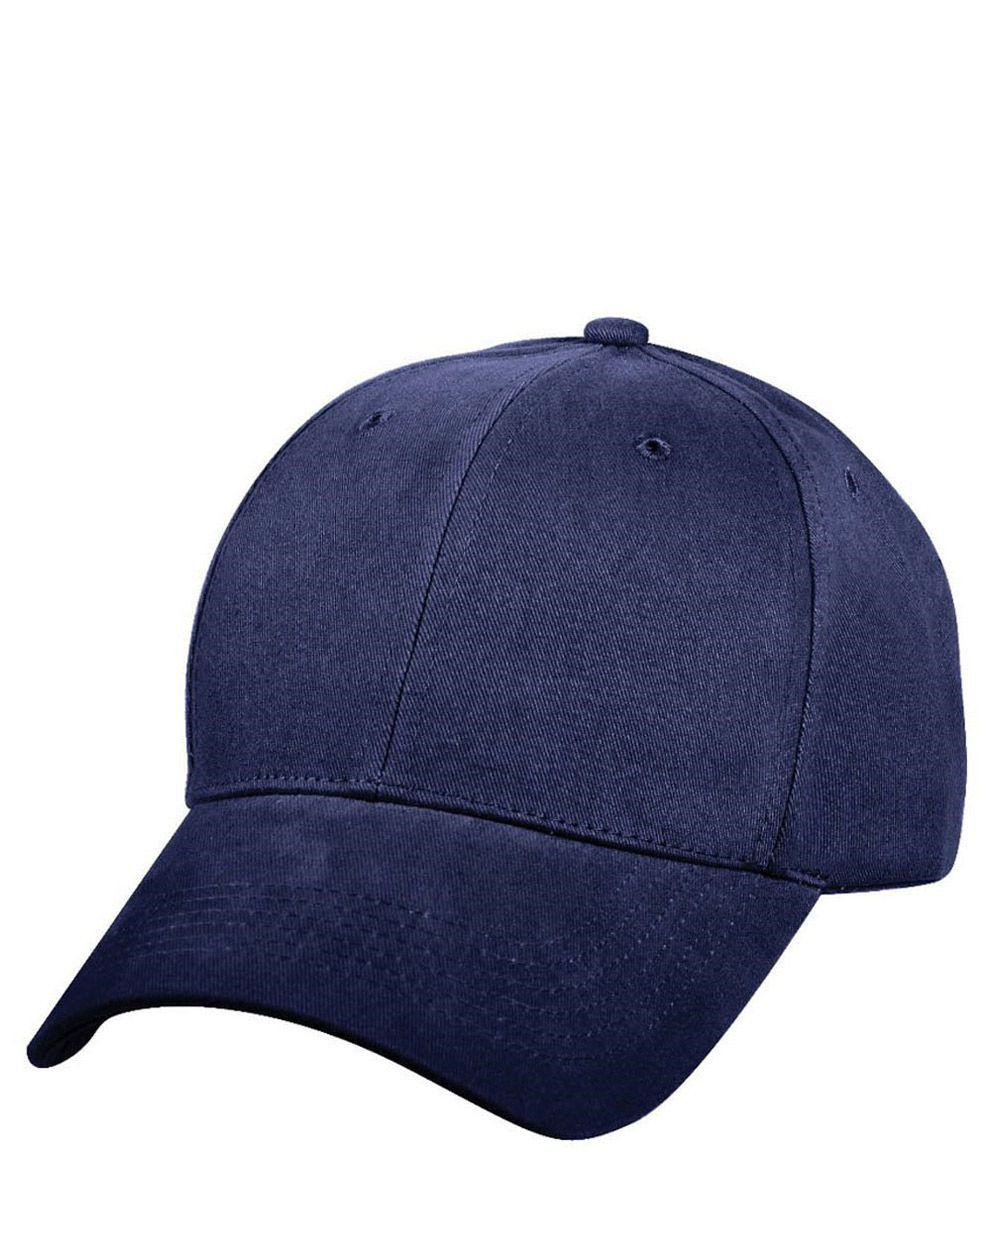 Billede af Rothco Low Profile Baseball Cap (Navy, One Size)